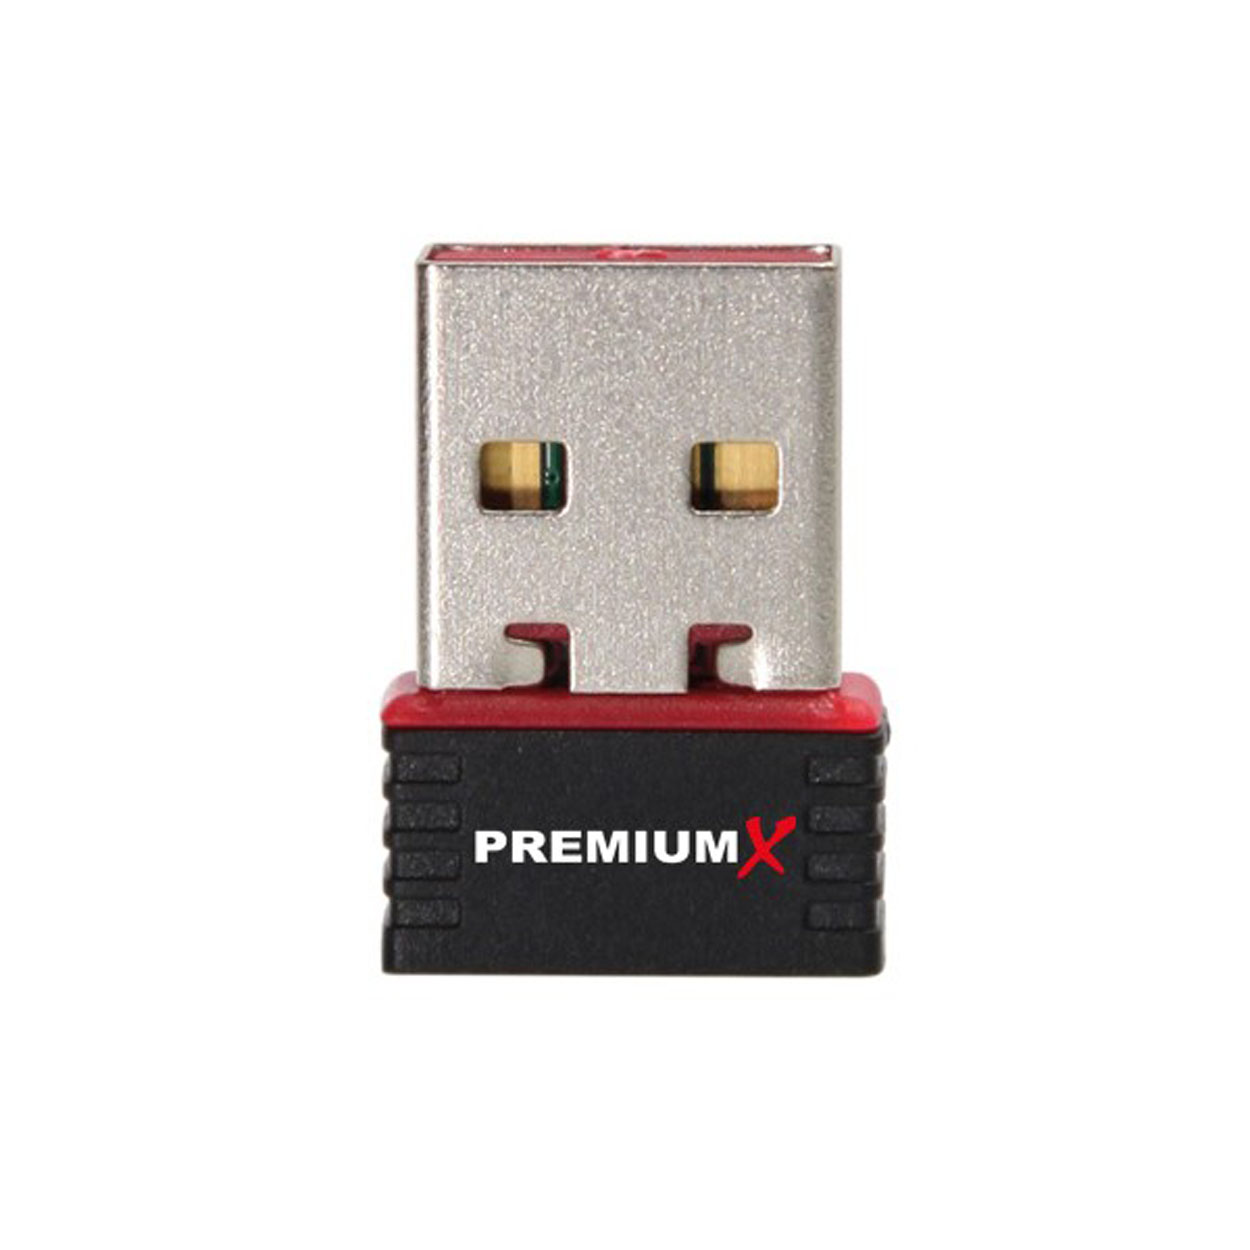 Stick PX150 MINI WLAN-Adapter, USB-Micro-Pen Mbit Wireless N 150 Schwarz Adapter W-Lan WLAN PREMIUMX